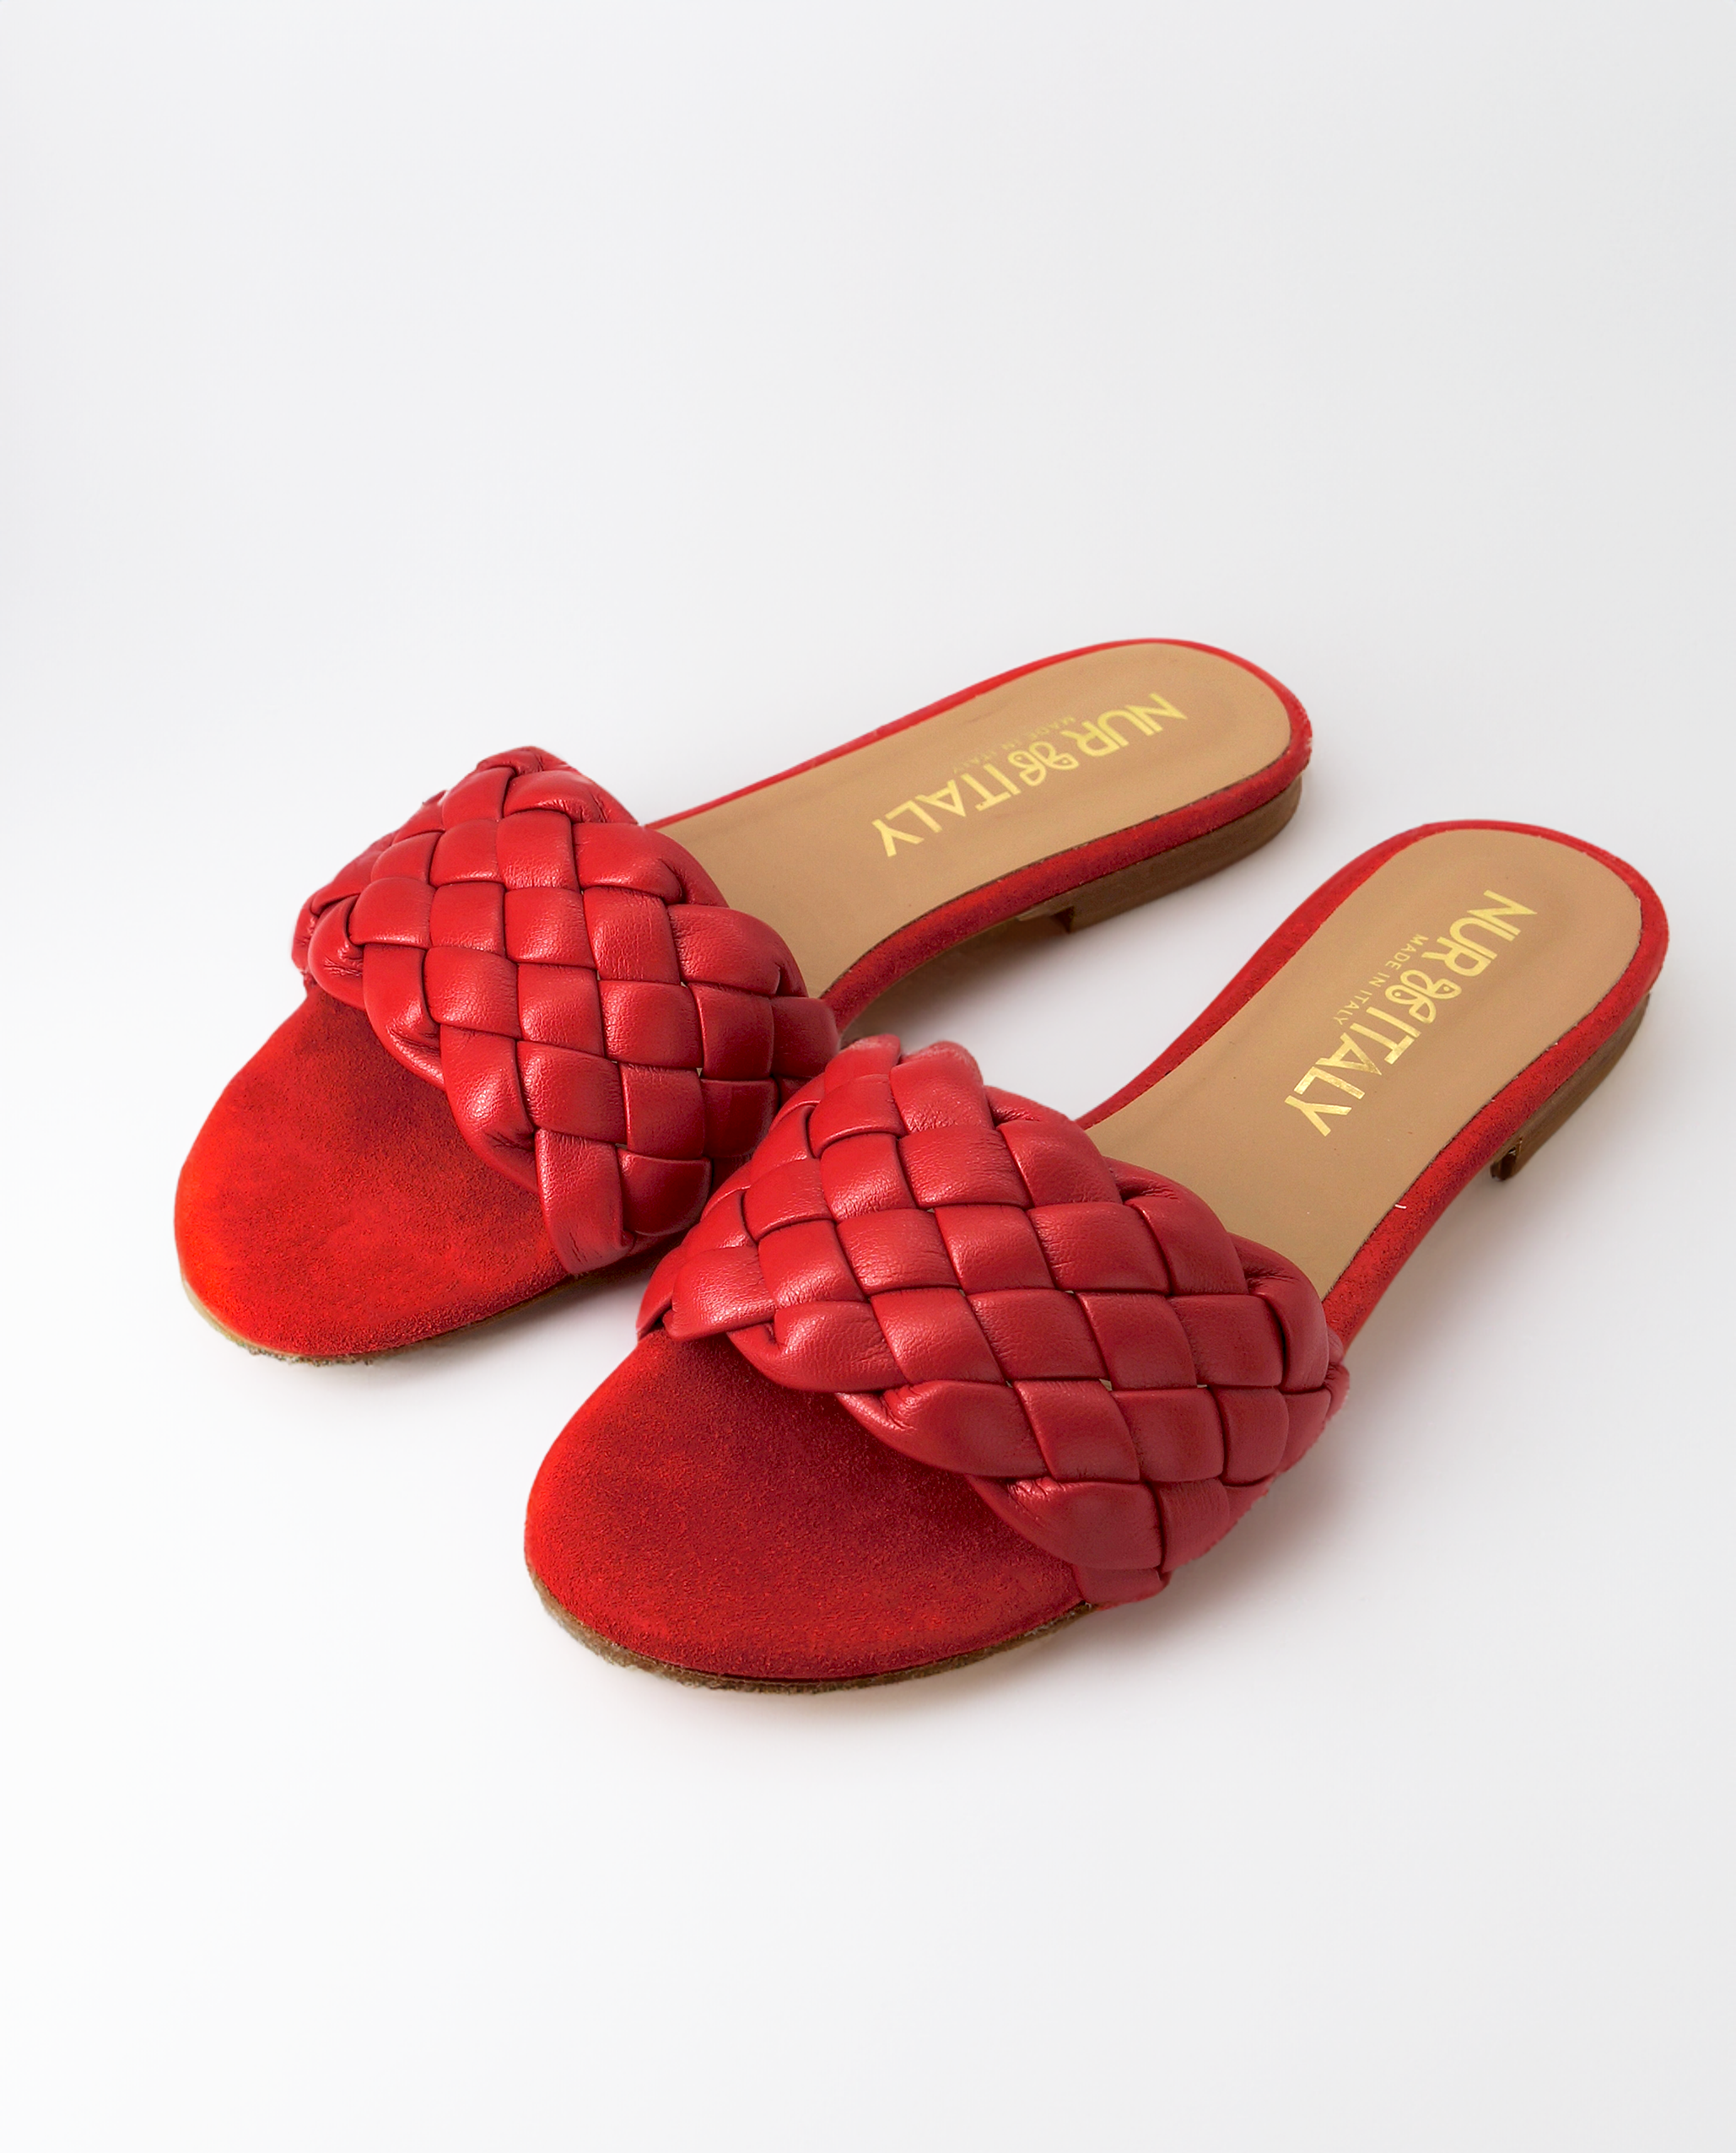 NUR ITALY Serafina Braided Italian Leather Sandal, Main, color, RED #color_varese fire